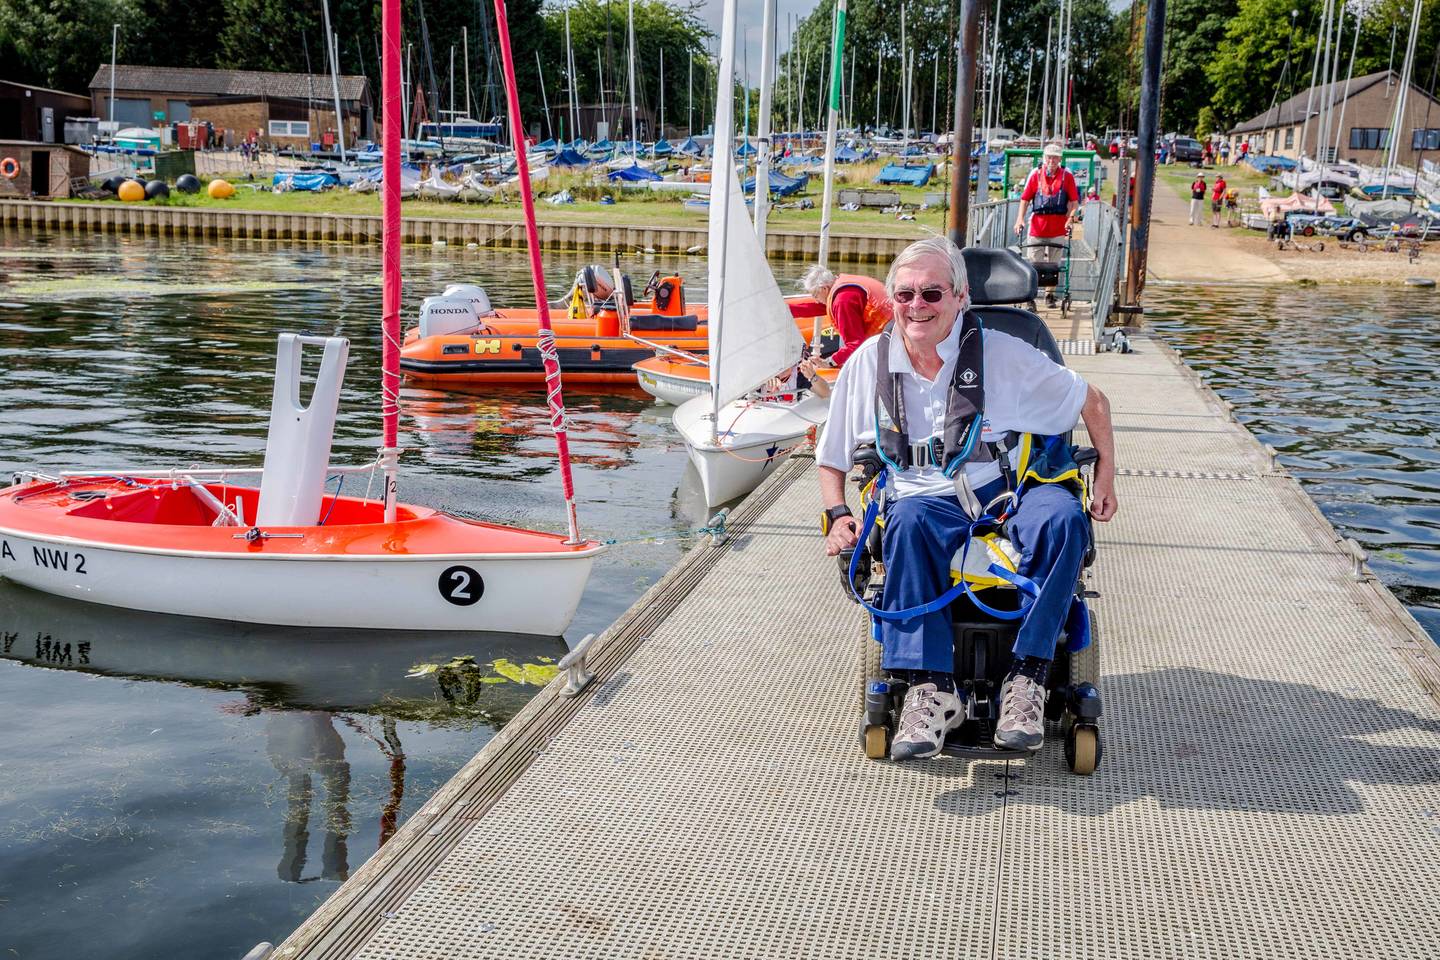 Chris Emmett at a RYA Rutland Sailability Event in 2018